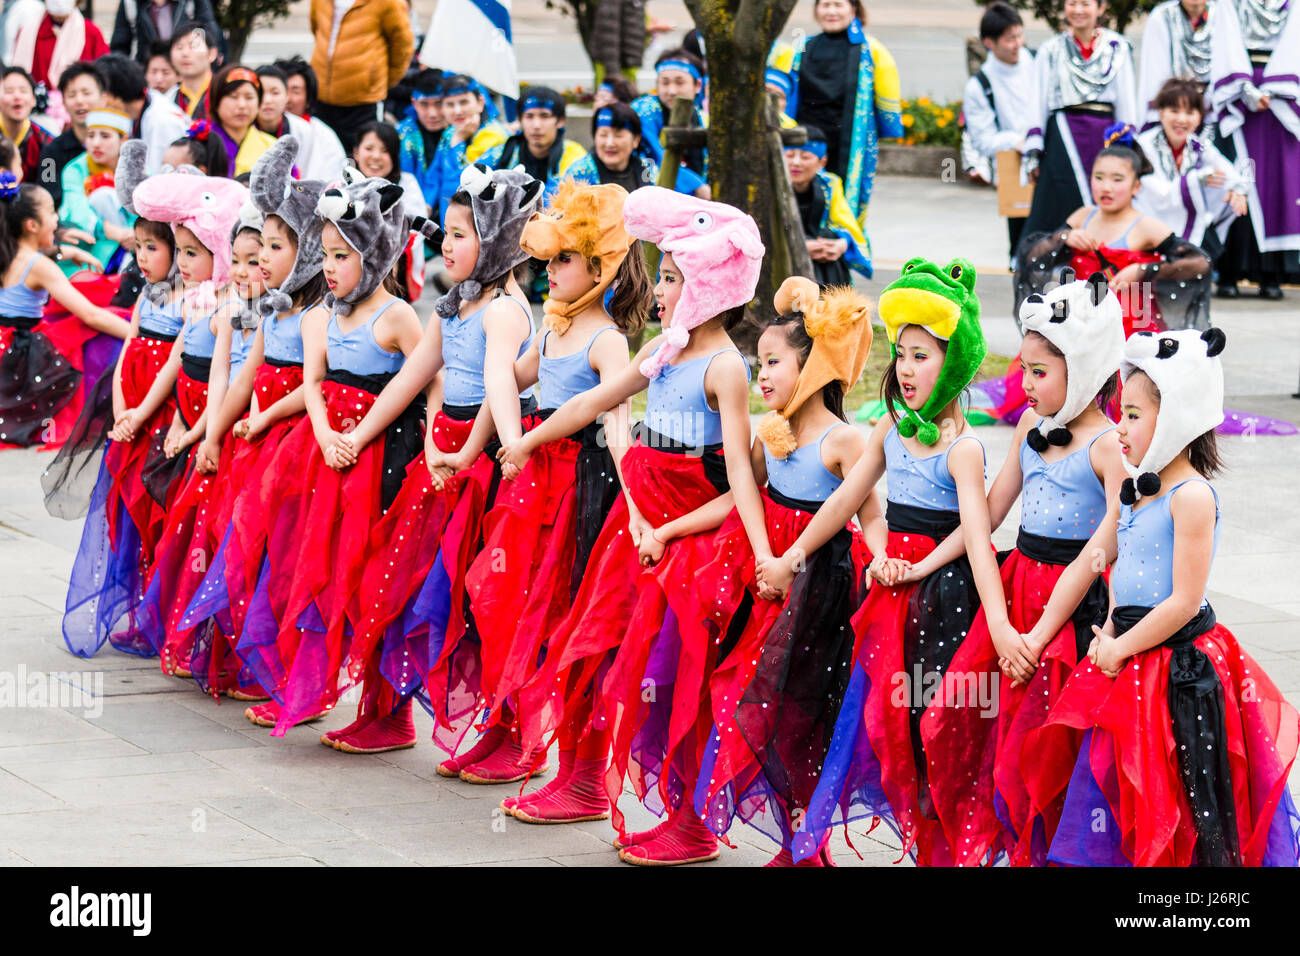 Japan, Kumamoto, Hinokuni Yosakoi Festival. Children's Girl dance team, dressed as fairies in red flayed costumes with animal hats. Dancing outdoors. Stock Photo